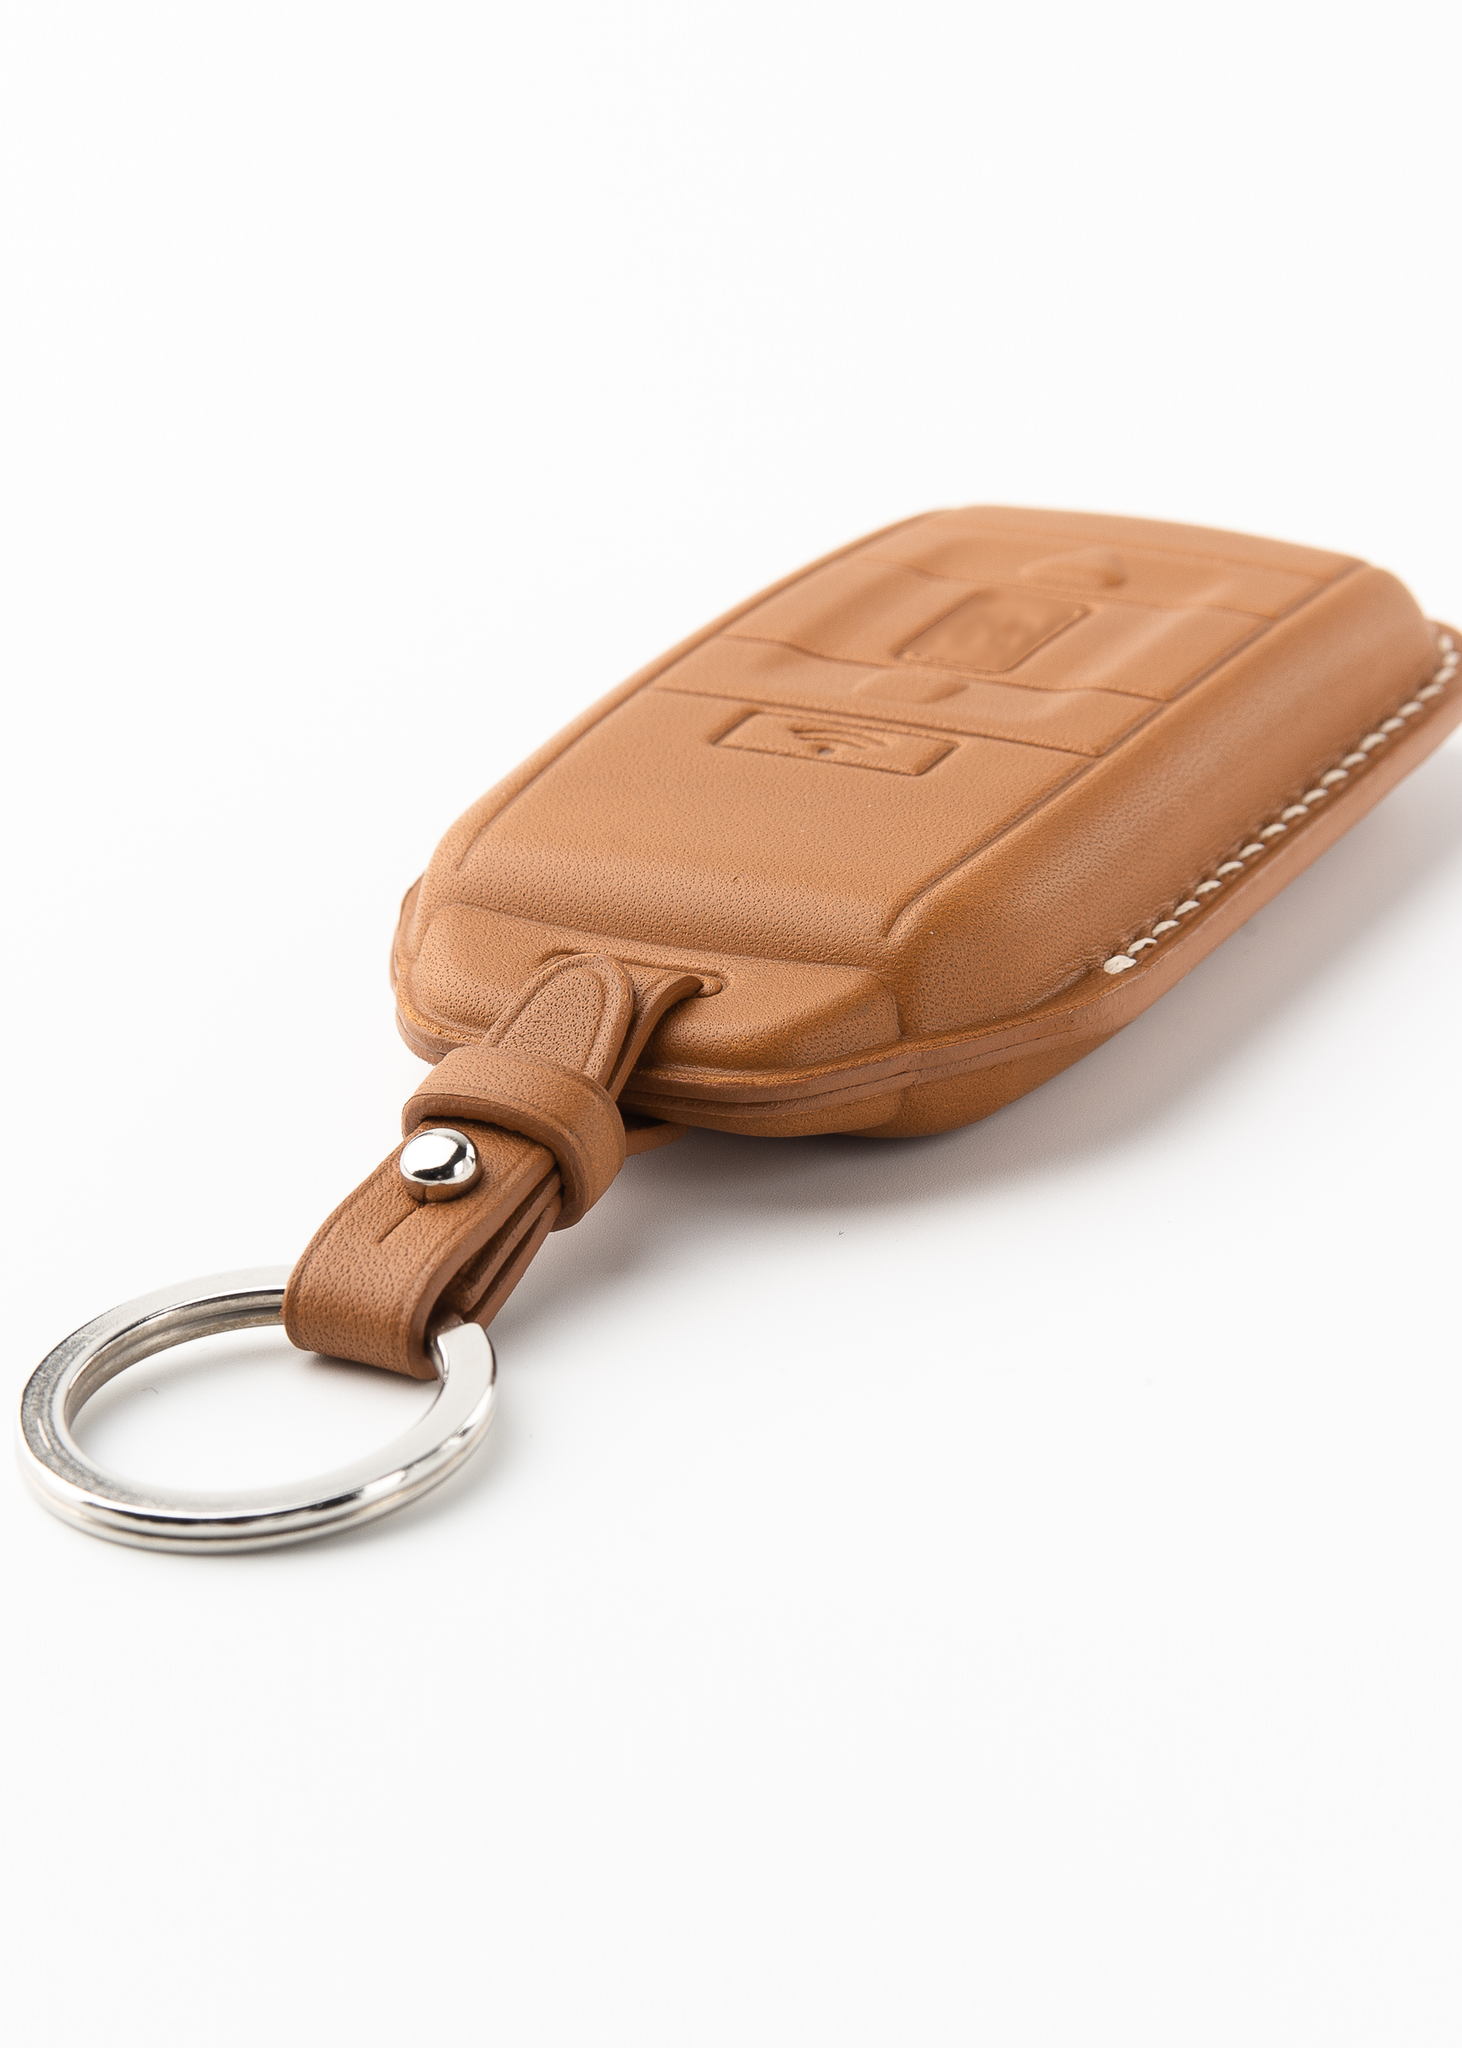 Handmade Leather Mazda Car Key Case.leather Car Key Fob Cover